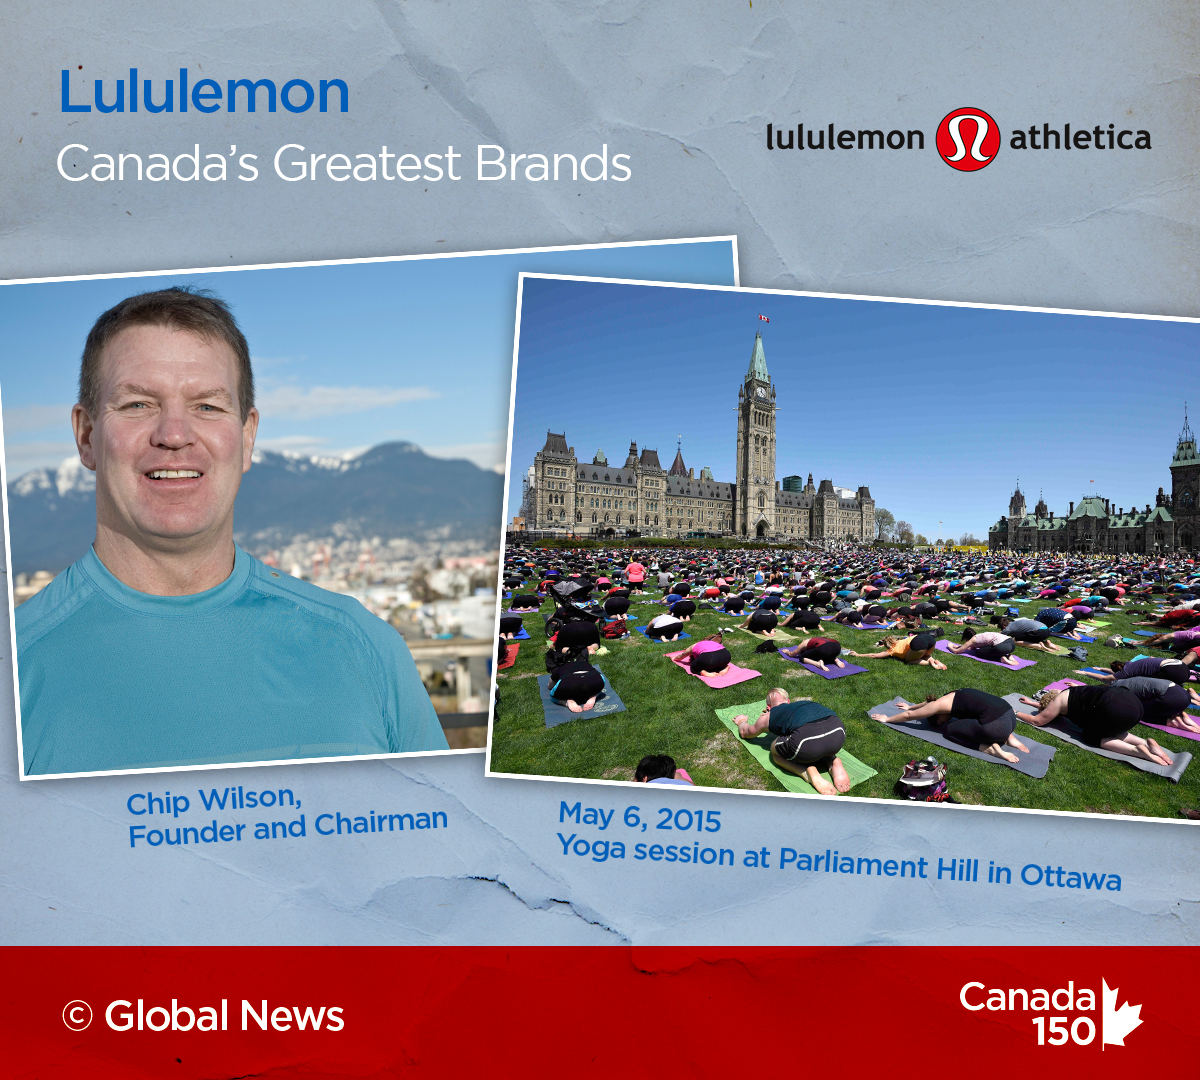 Canadian Brands Like Lululemon